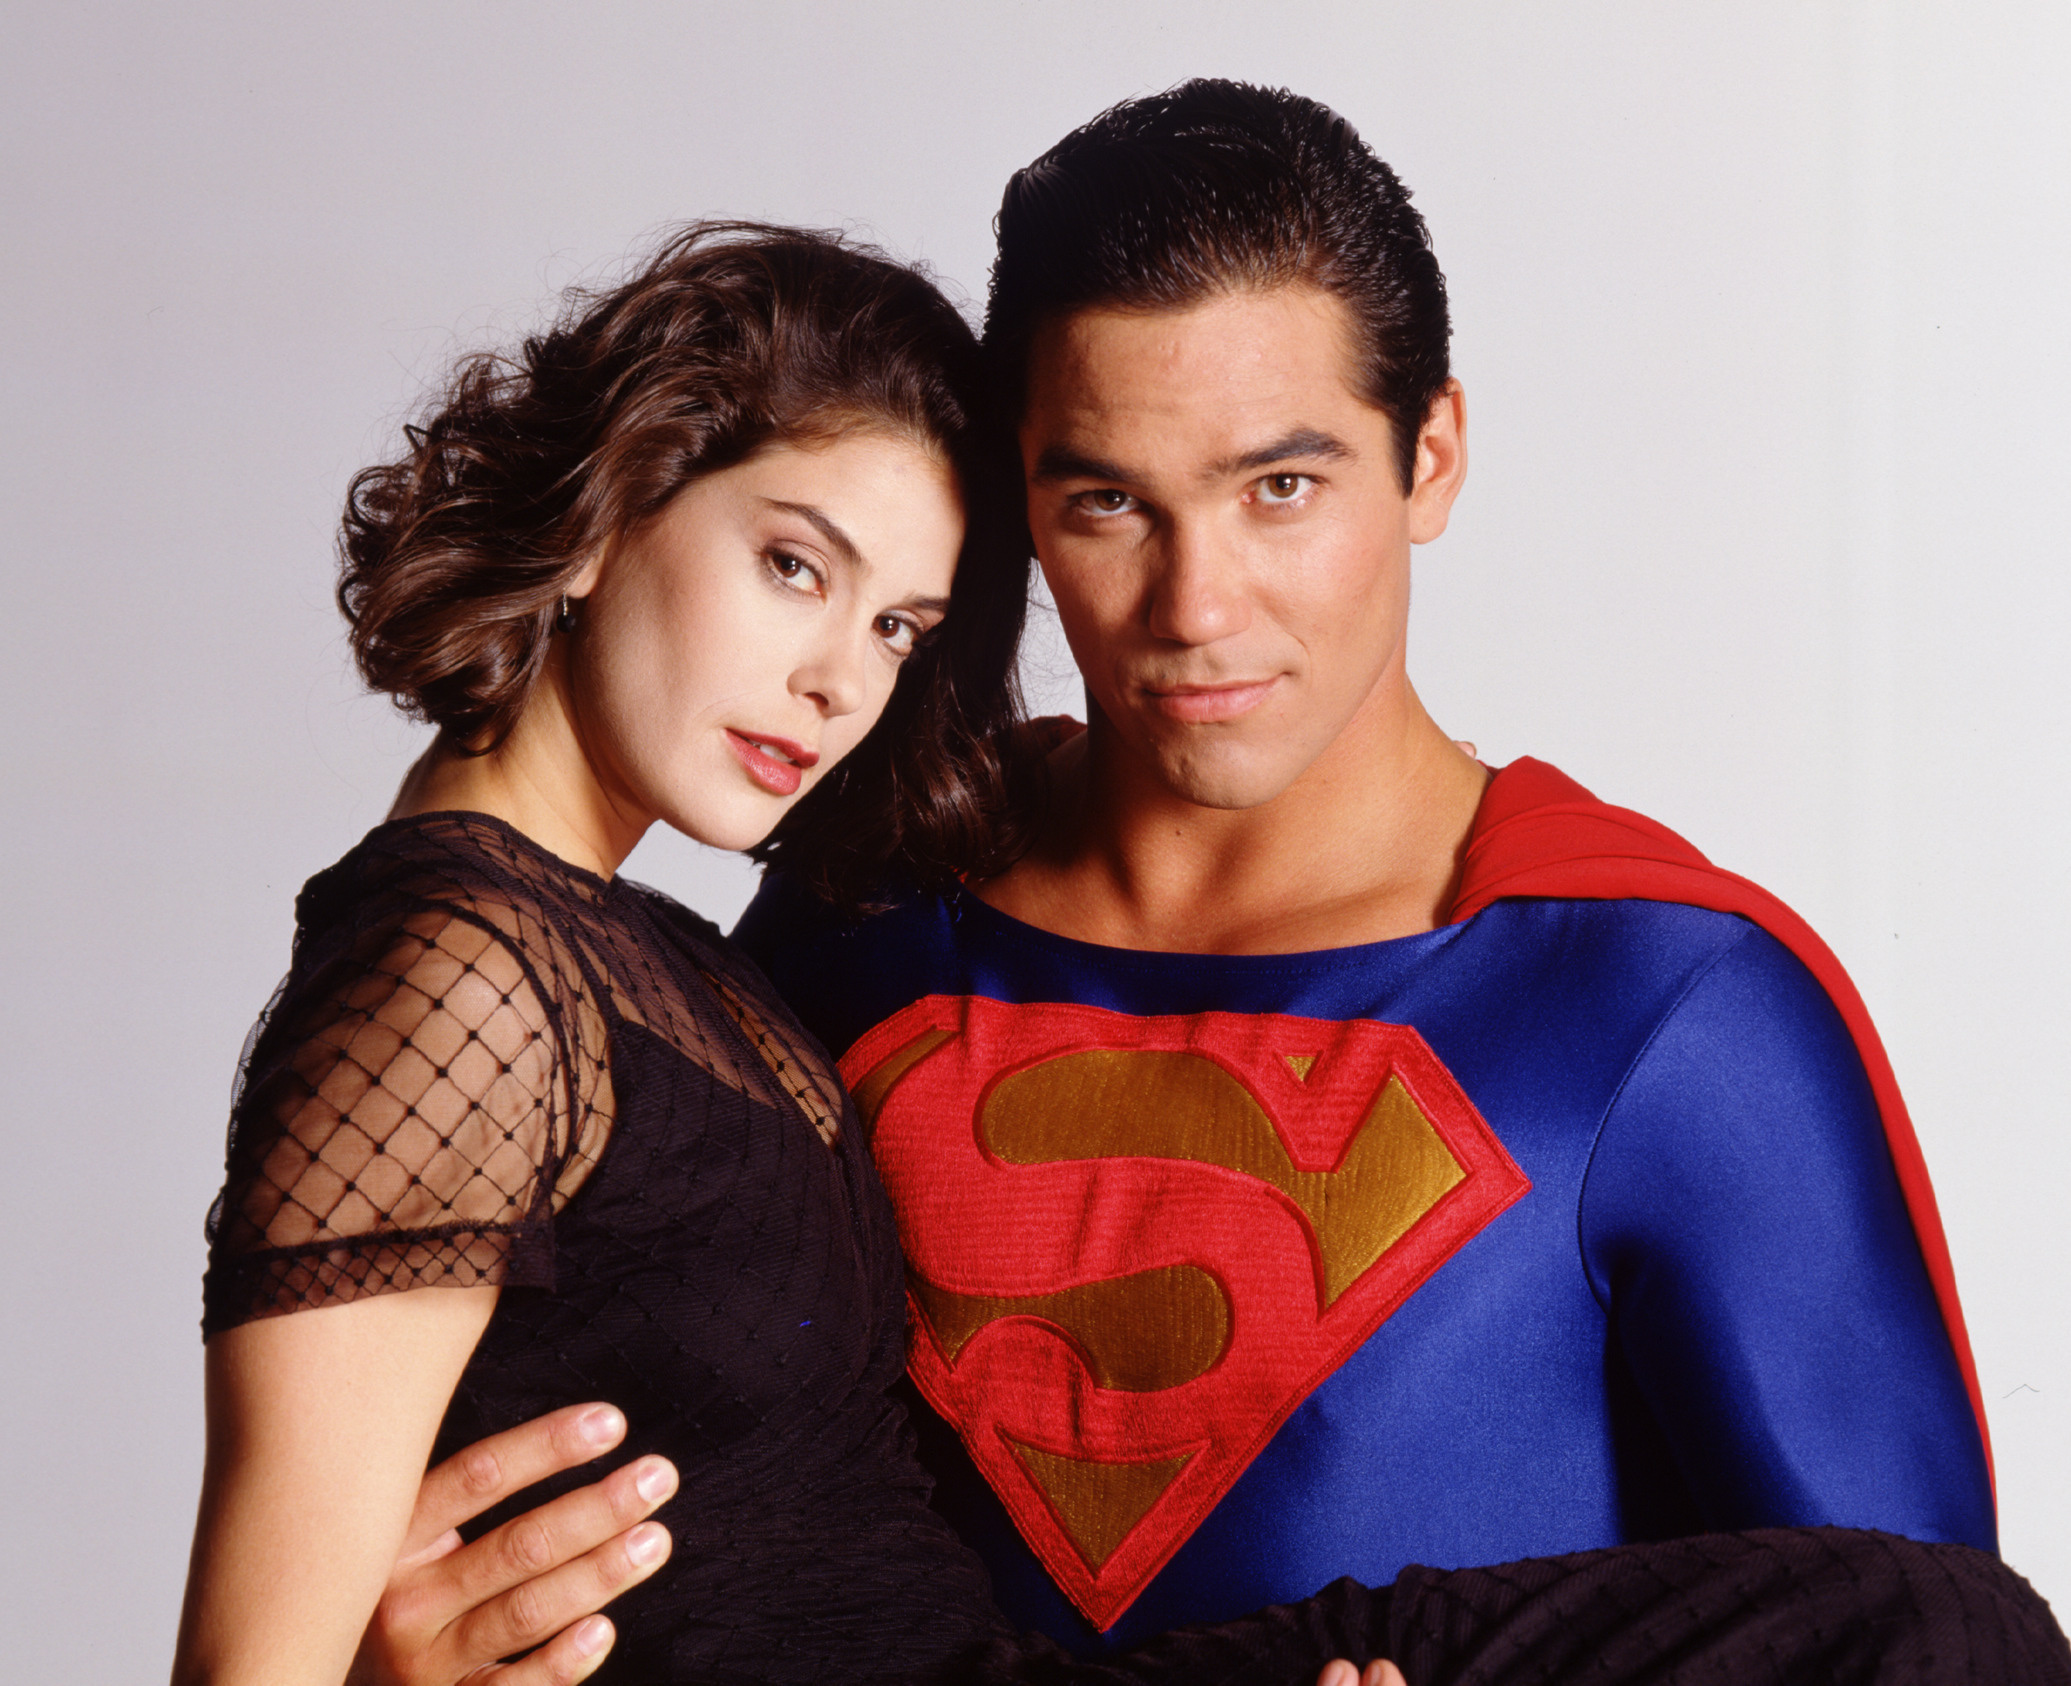 Lois & Clark HD wallpaper, Background image, Superman TV show, 2080x1690 HD Desktop